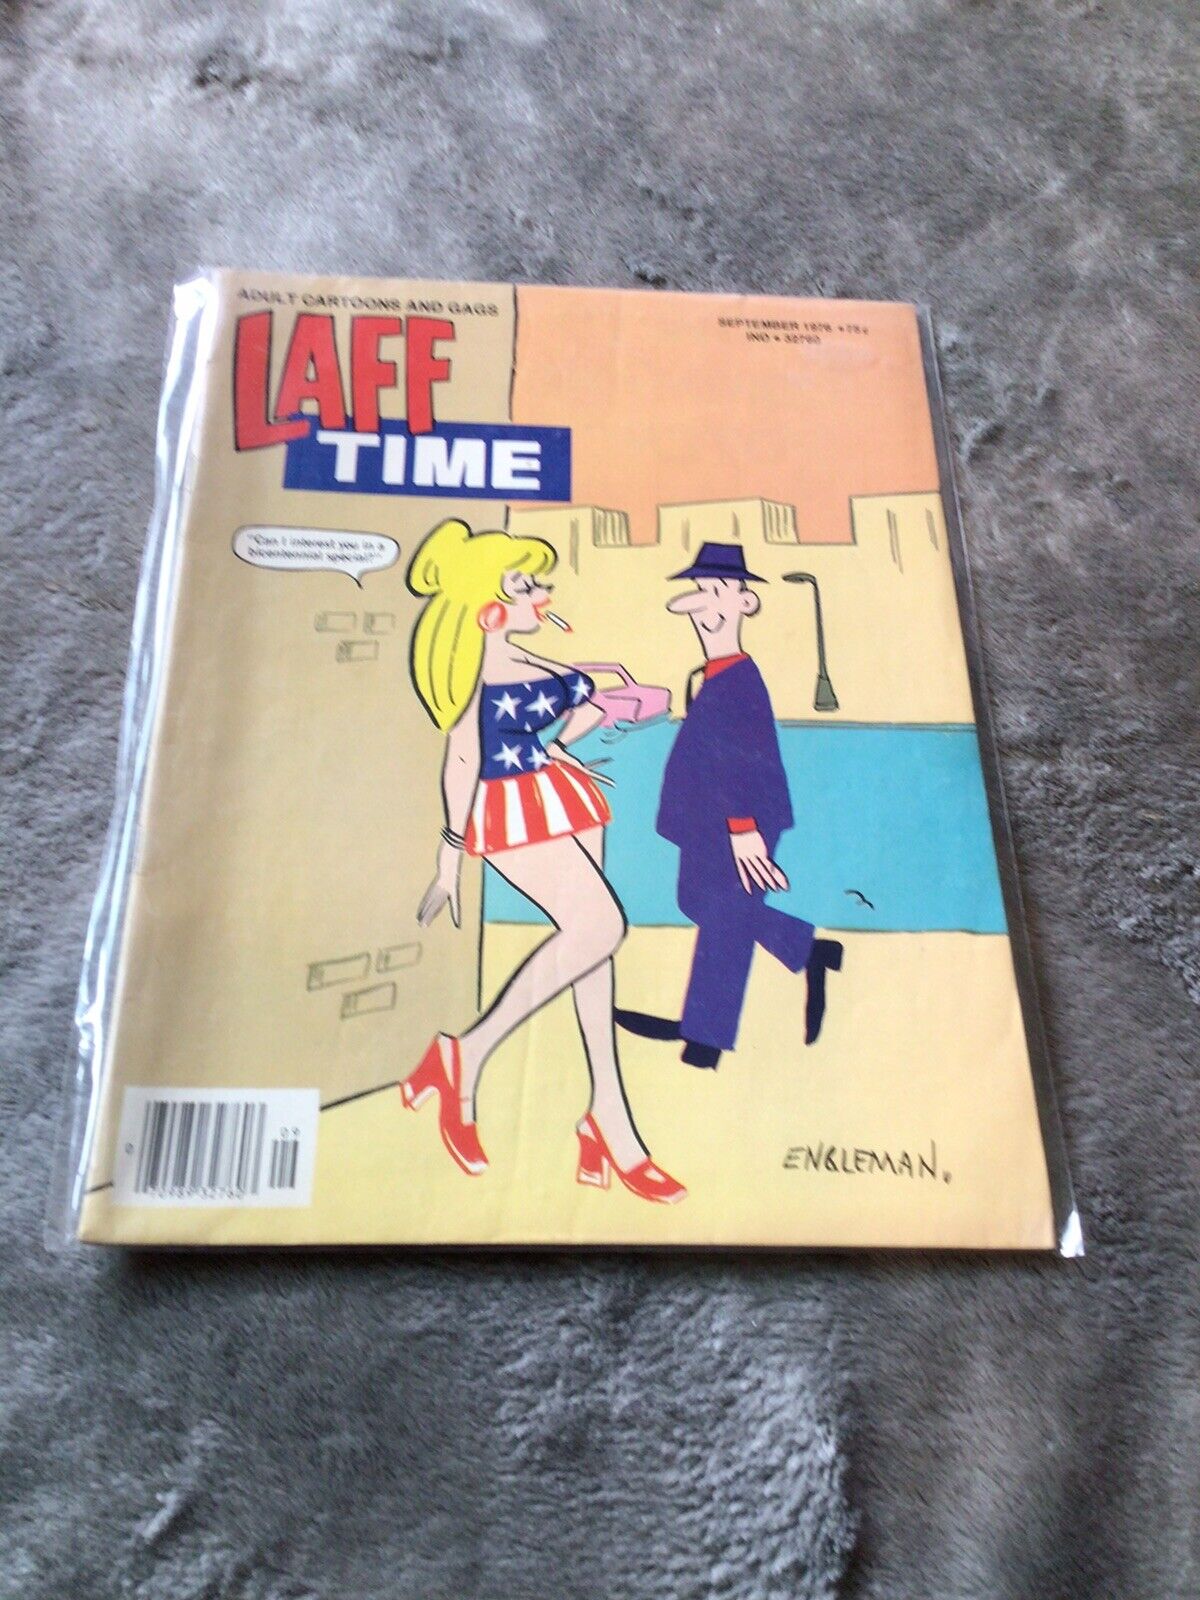 Vintage Laff Time September 1976 Adult Humor And Dirty Joke Comic book